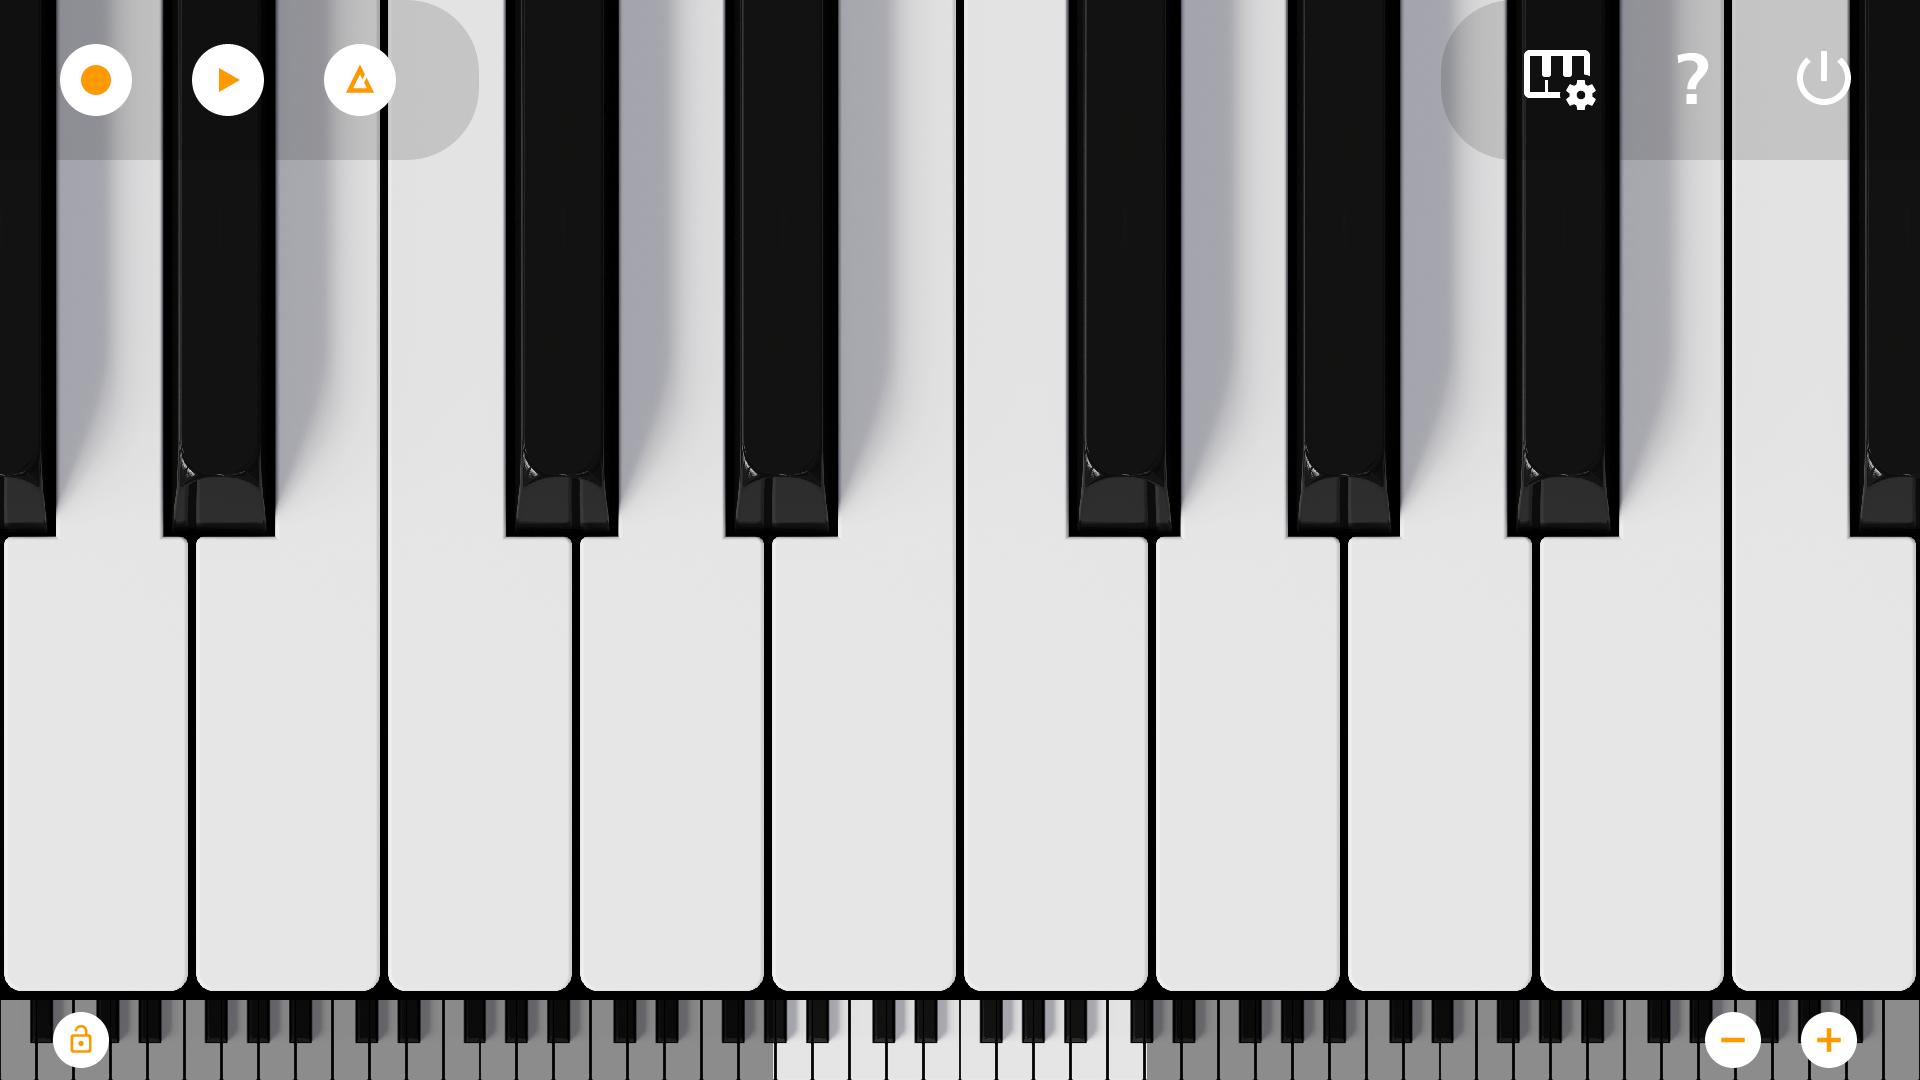 Mini Piano Pro Latest Version for Android